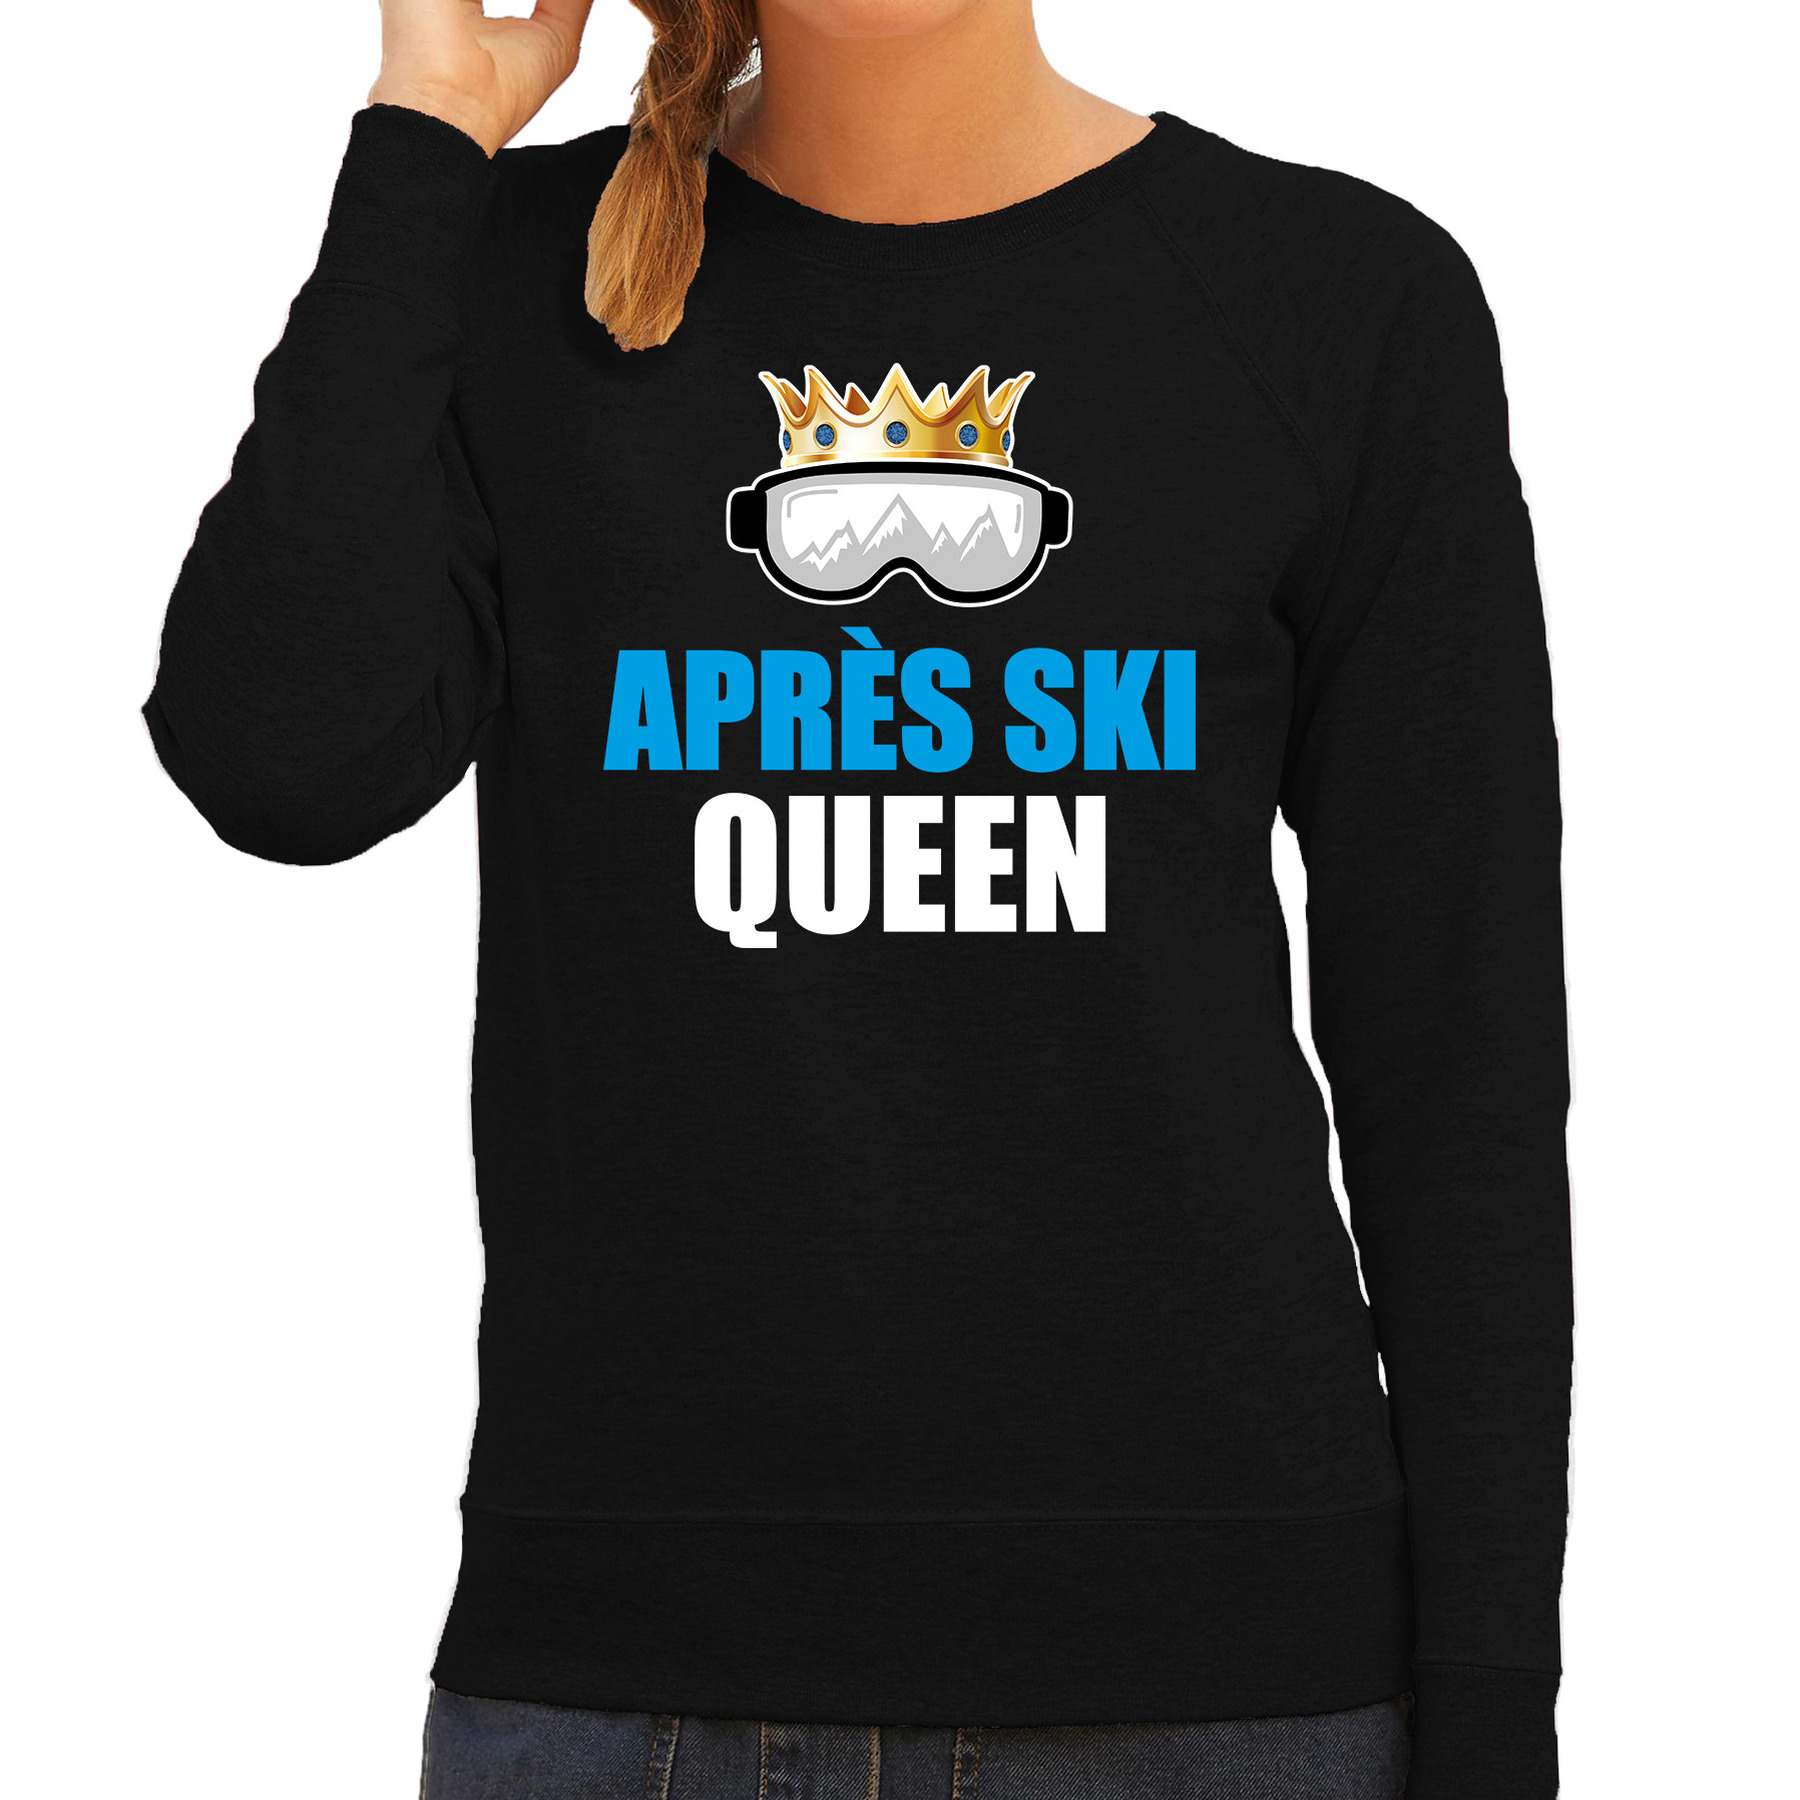 Apres ski trui Apres ski Queen zwart dames Wintersport sweater Foute apres ski outfit